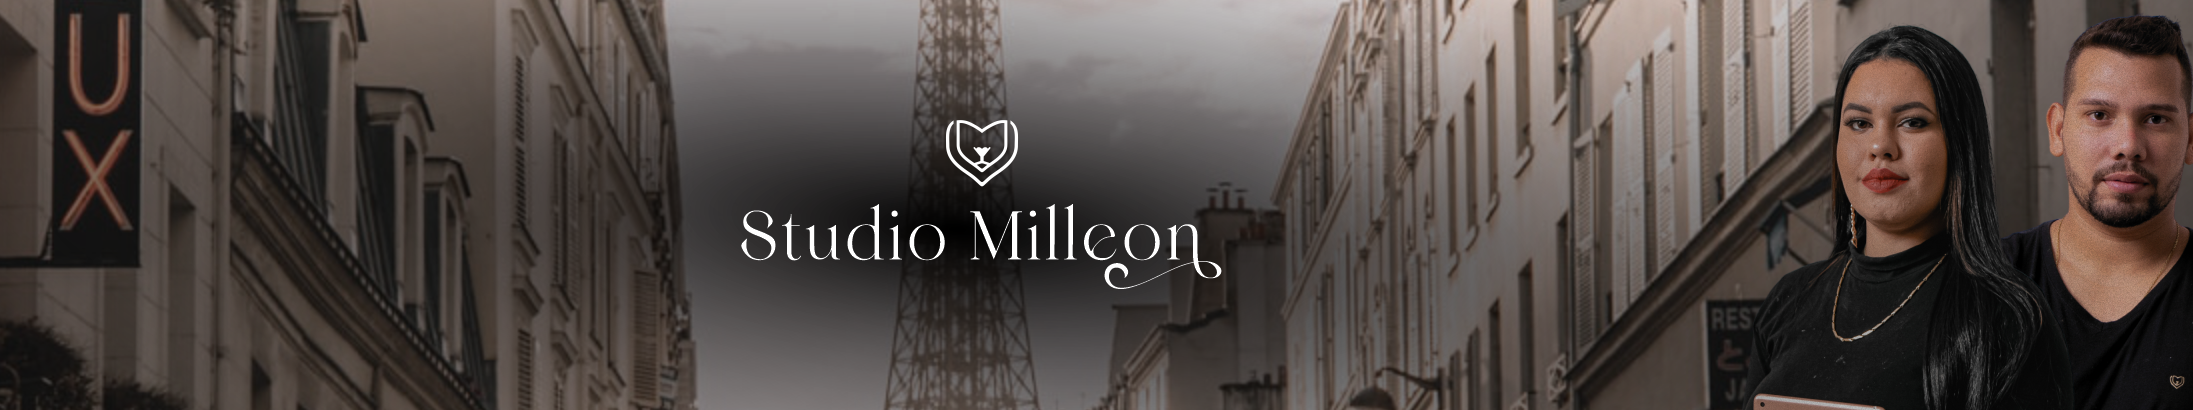 Studio Milleon's profile banner